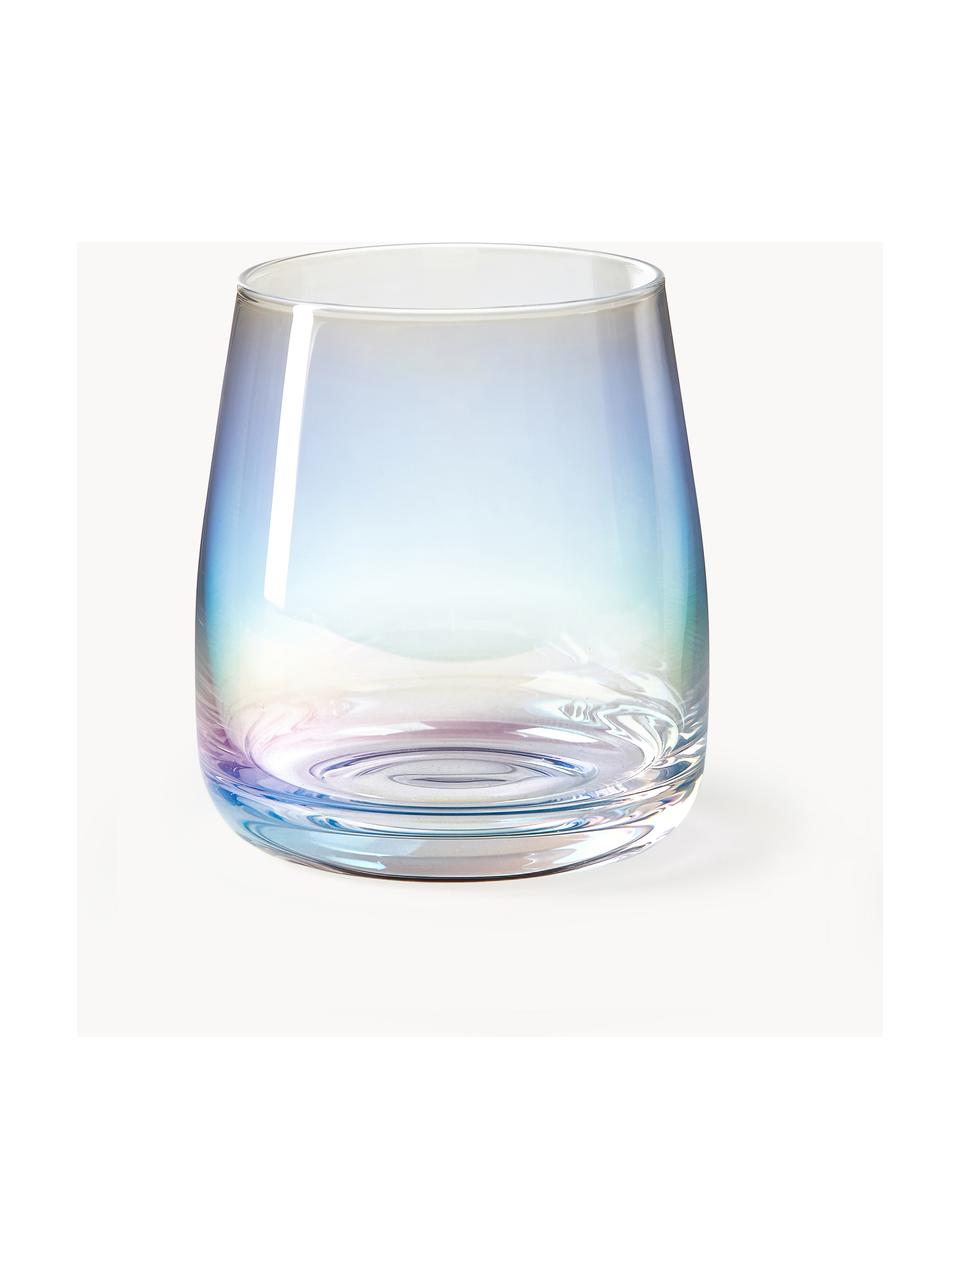 Bicchieri in vetro soffiato iridescente Rainbow 4 pz, Vetro soffiato, Trasparente, iridescente, Ø 9 x Alt. 10 cm, 370 ml